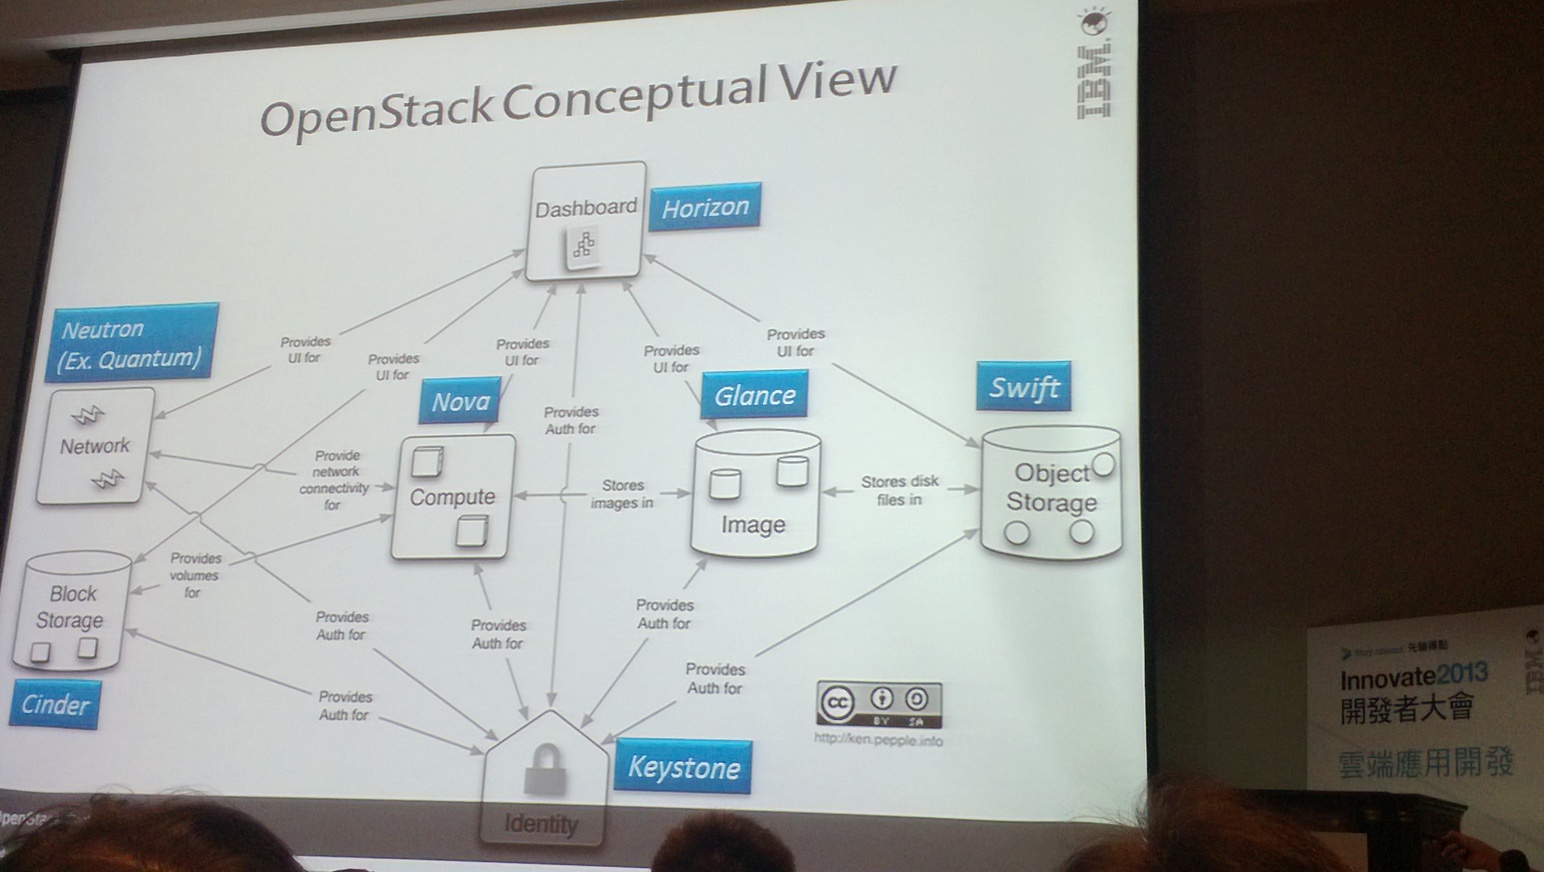 OpenStack Conceptual View